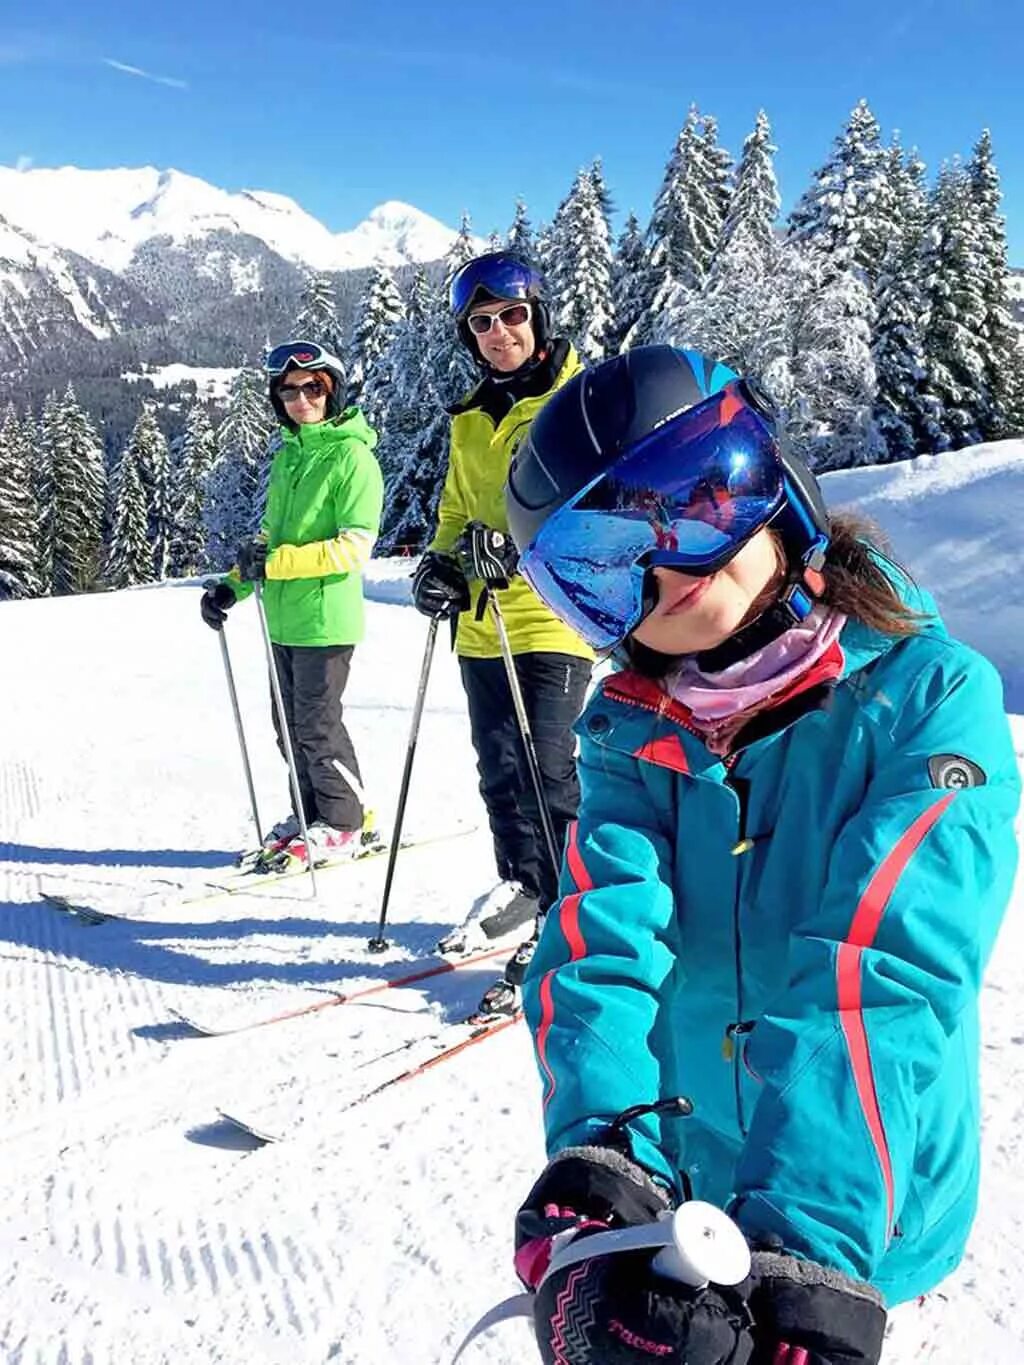 Семья на горных лыжах. Семья горнолыжников. Горнолыжный спорт семейный. Горы снег лыжи семья. Семья лыжников